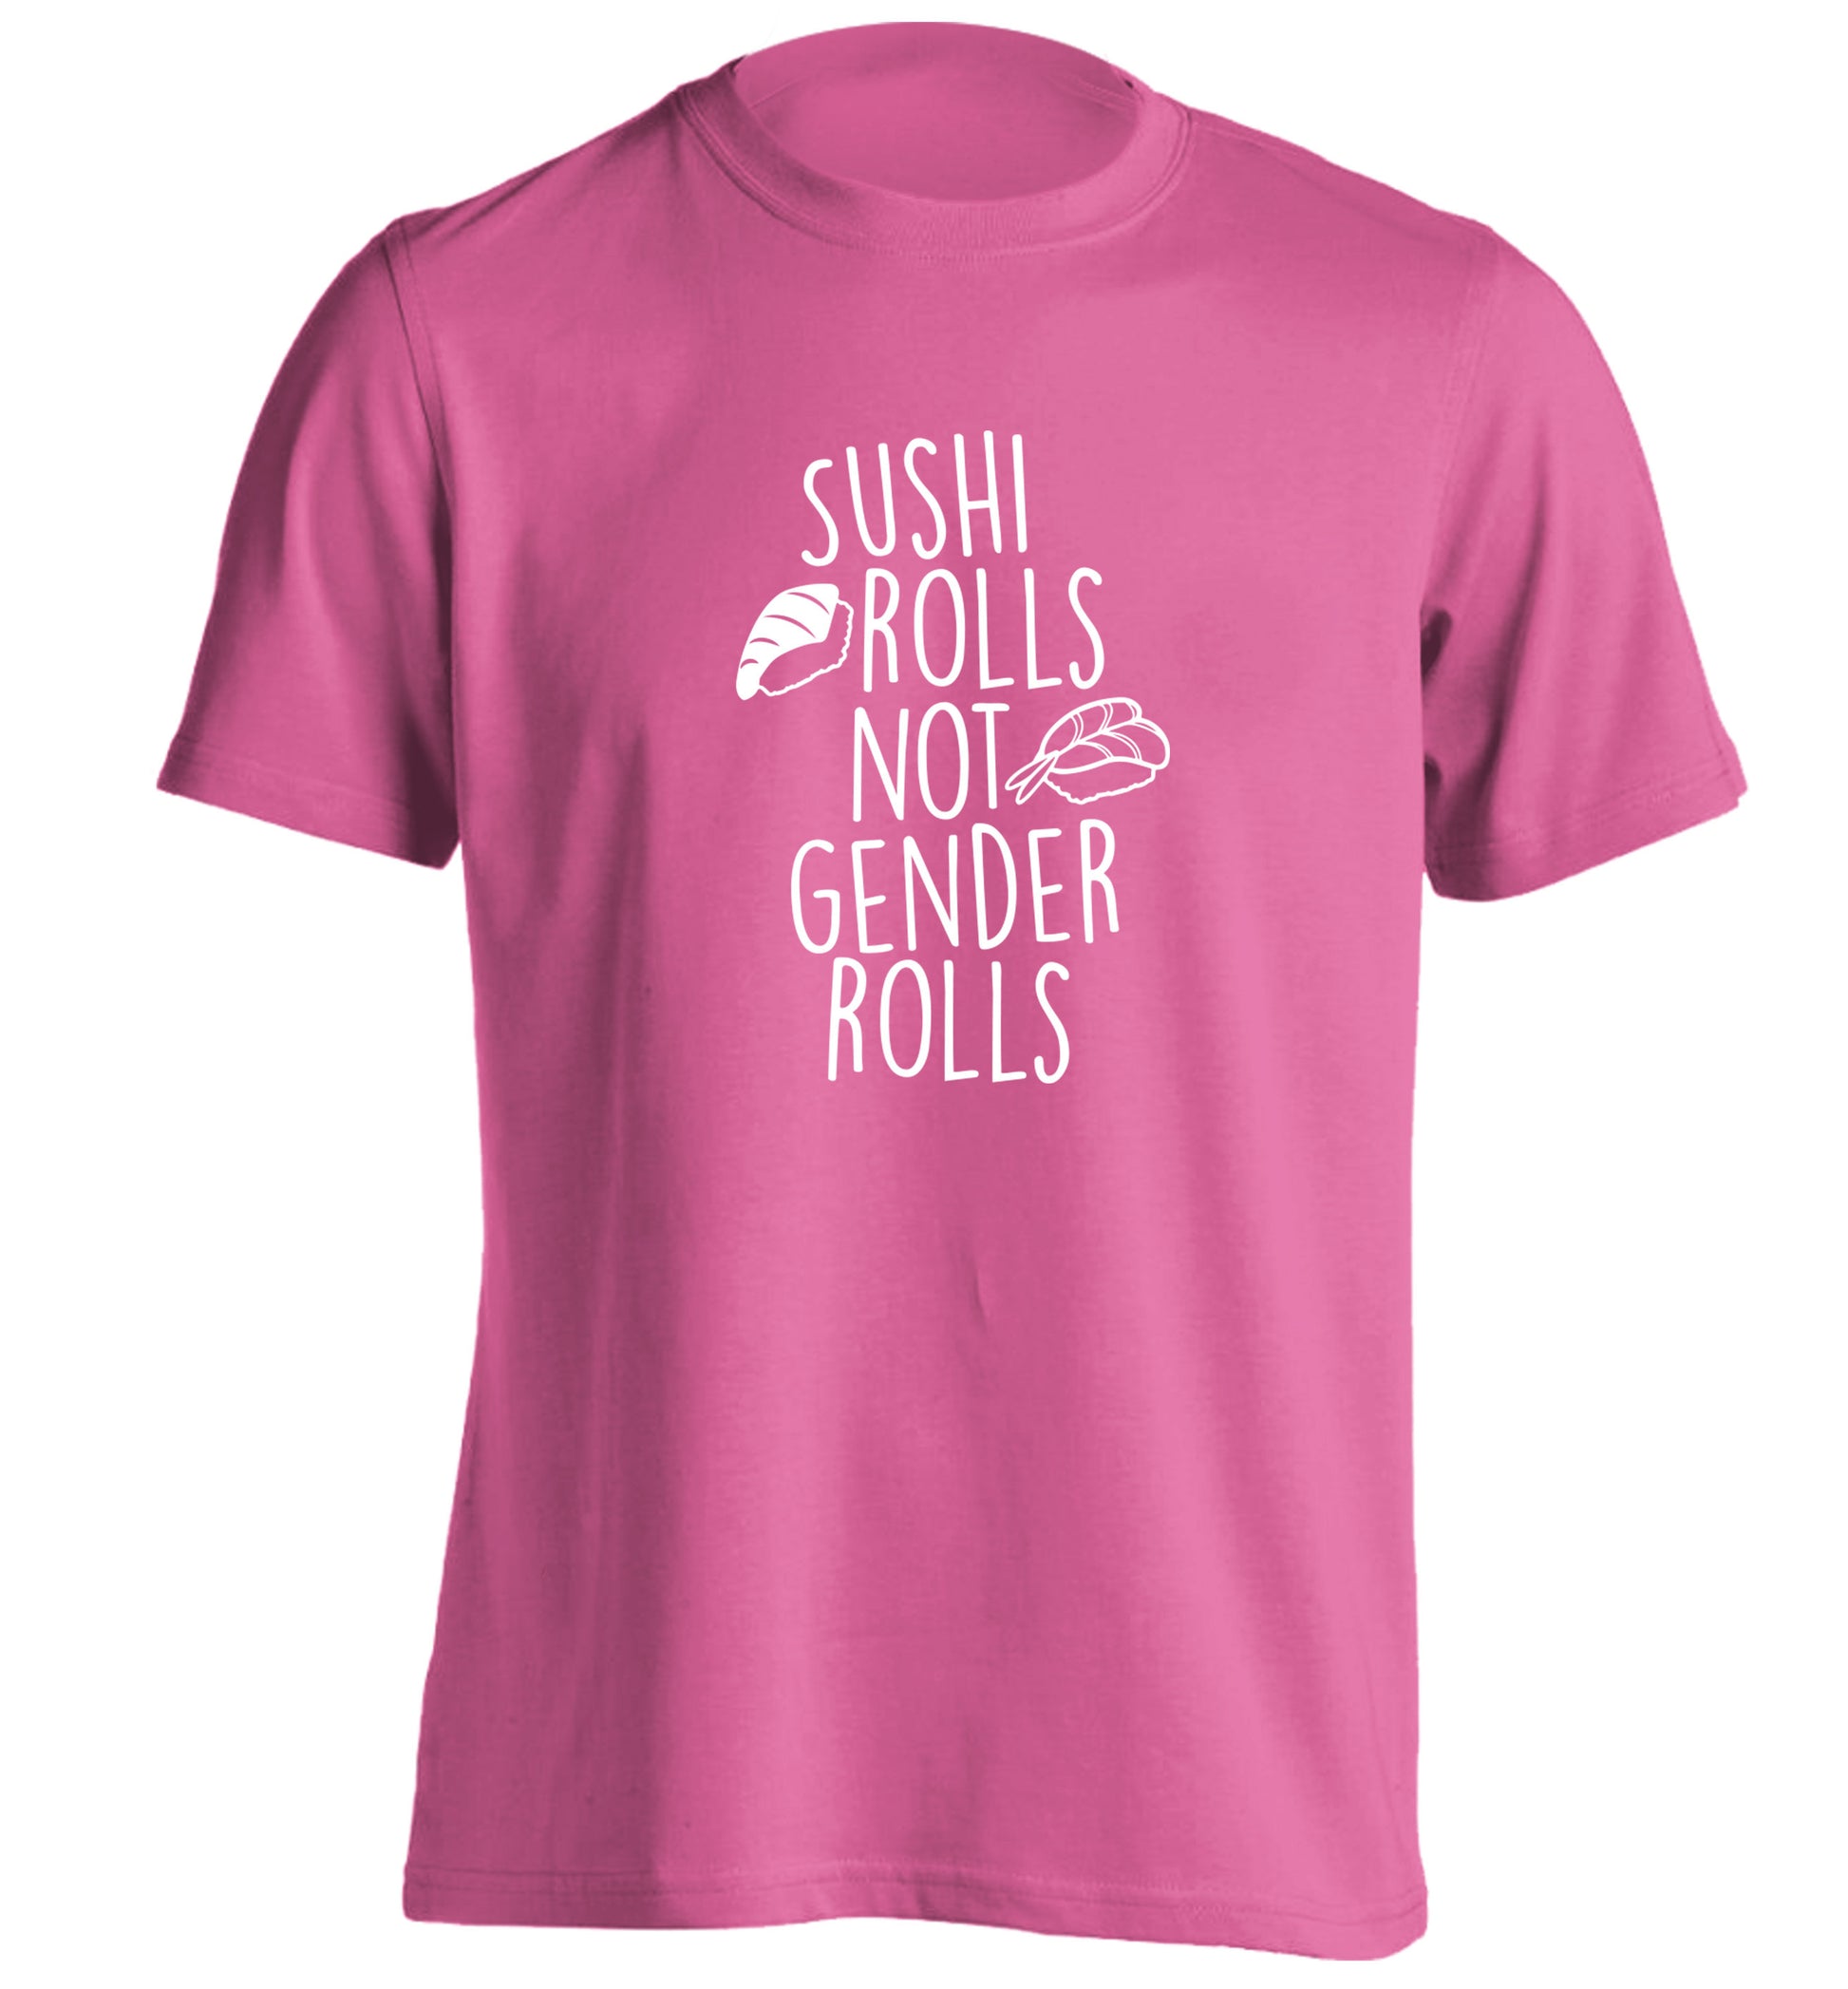 Sushi rolls not gender rolls adults unisex pink Tshirt 2XL